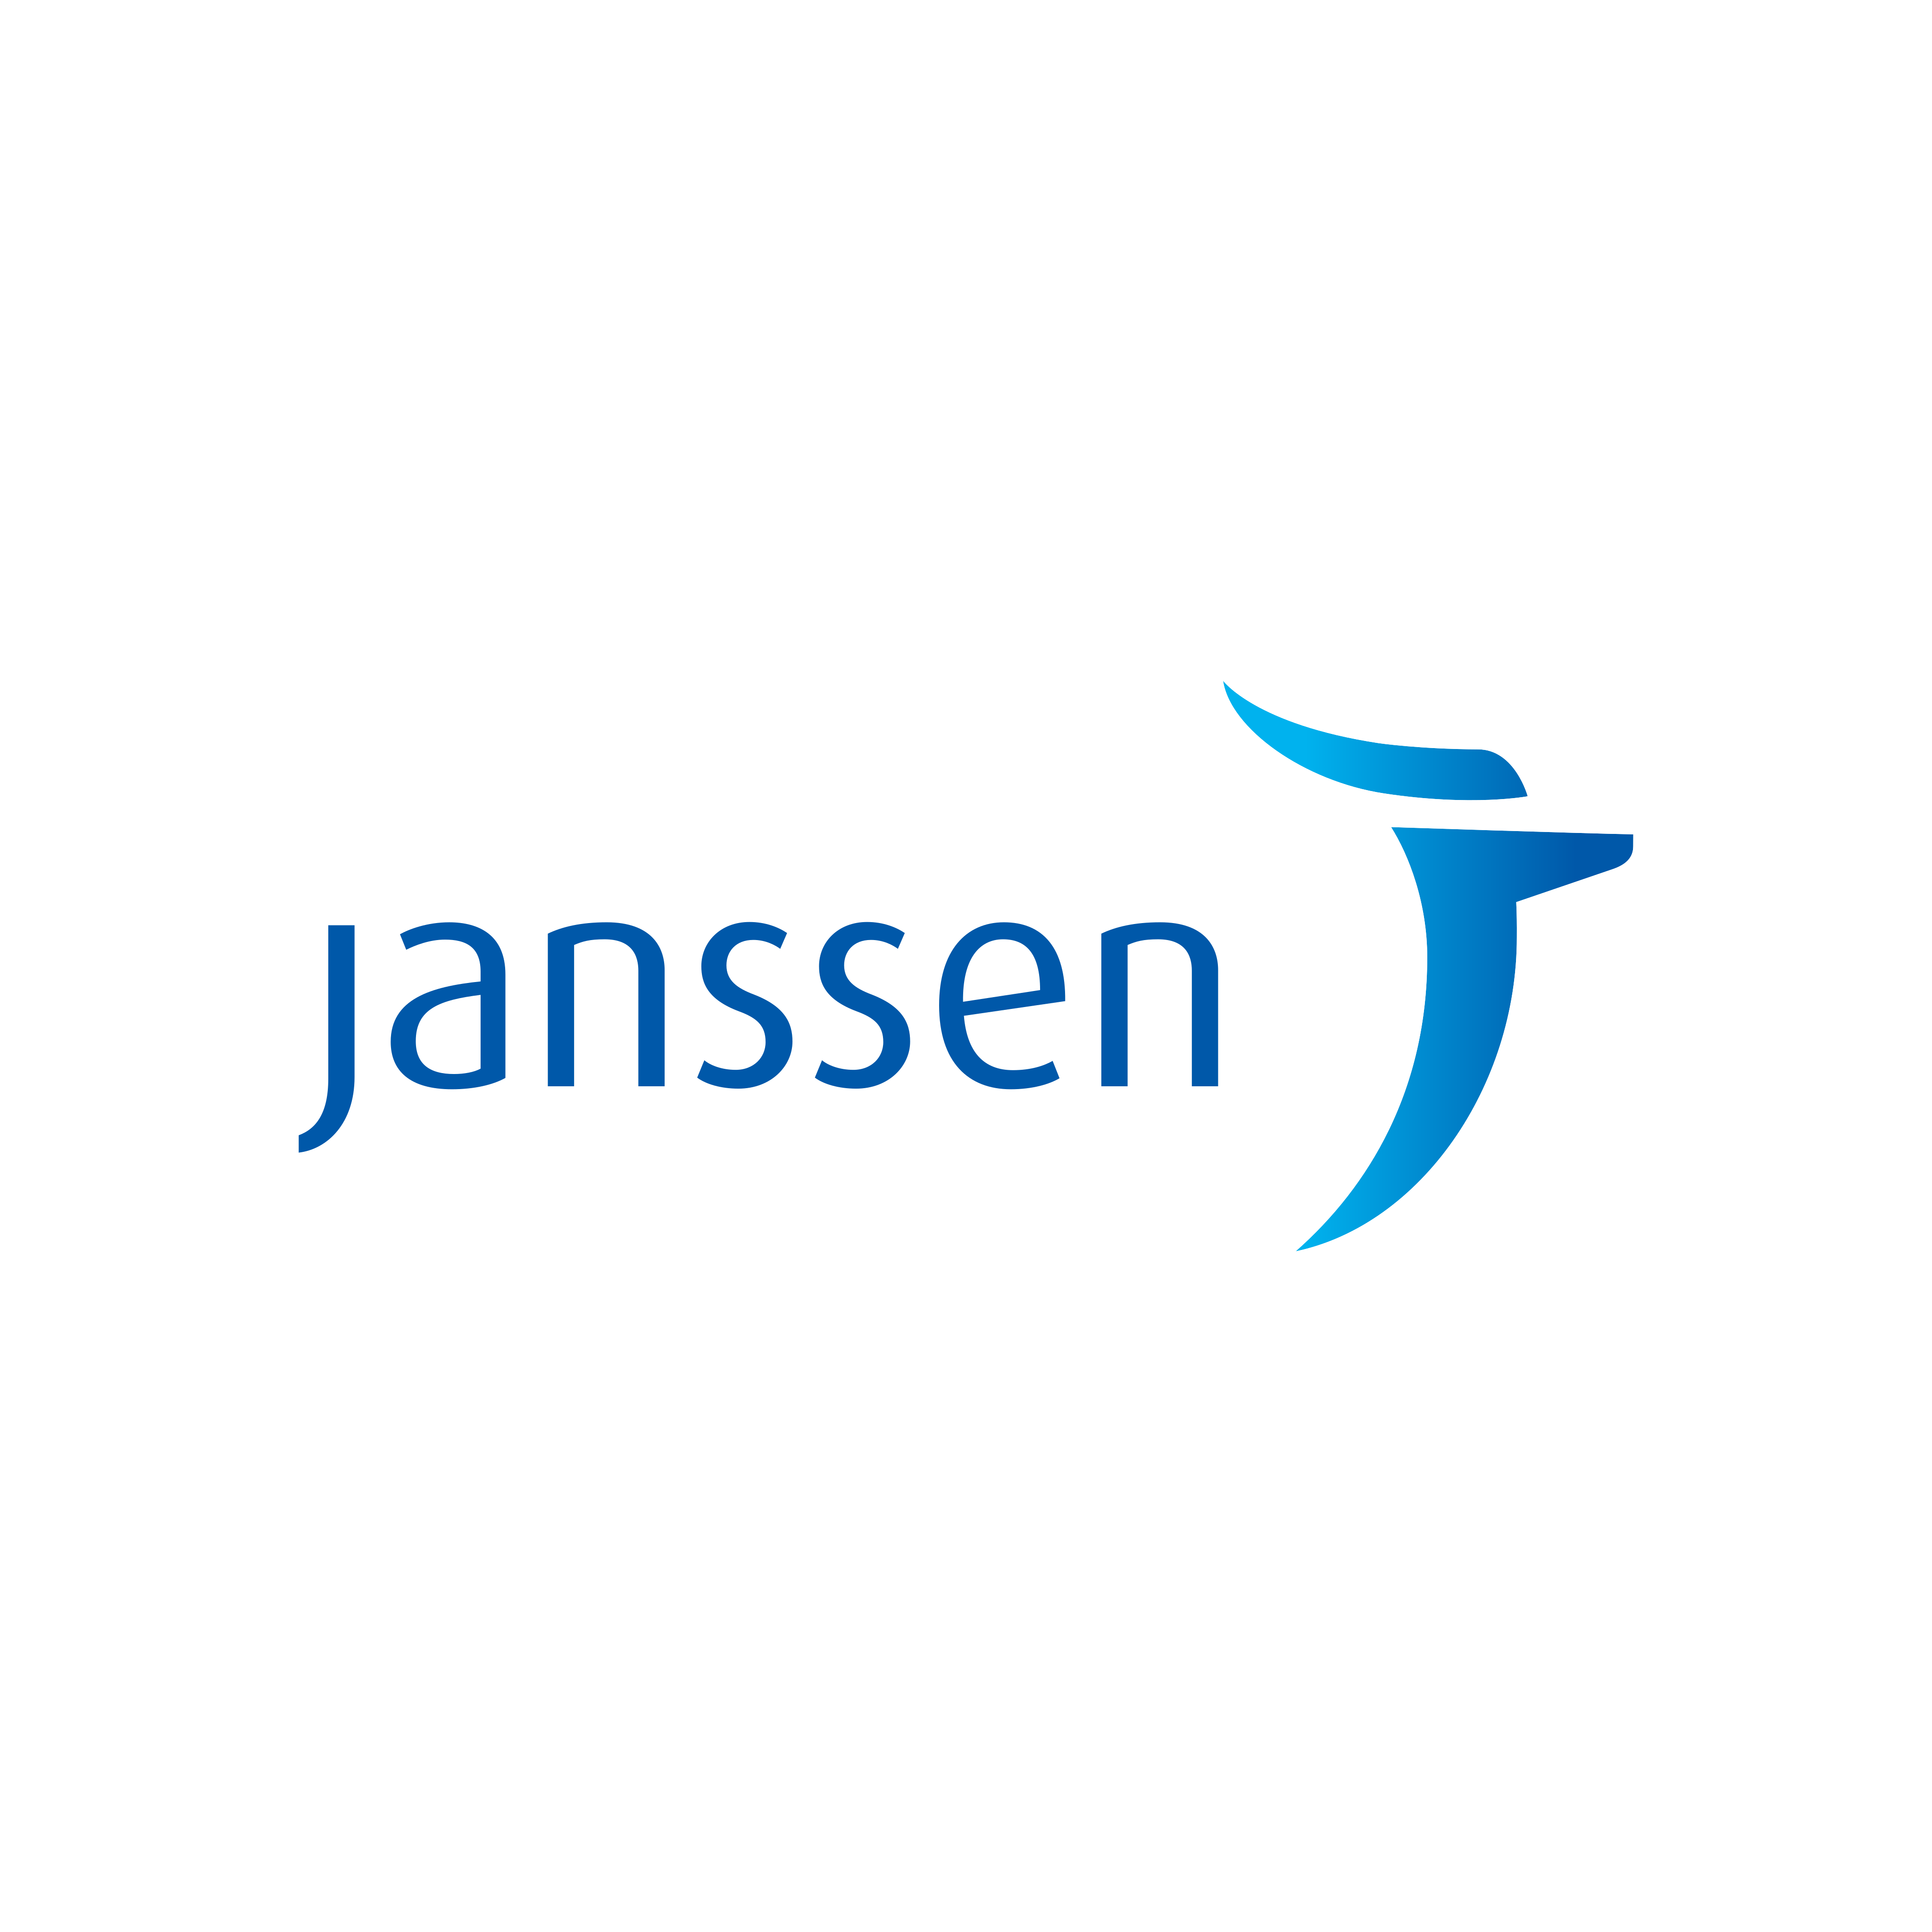 Janssen Logo PNG.